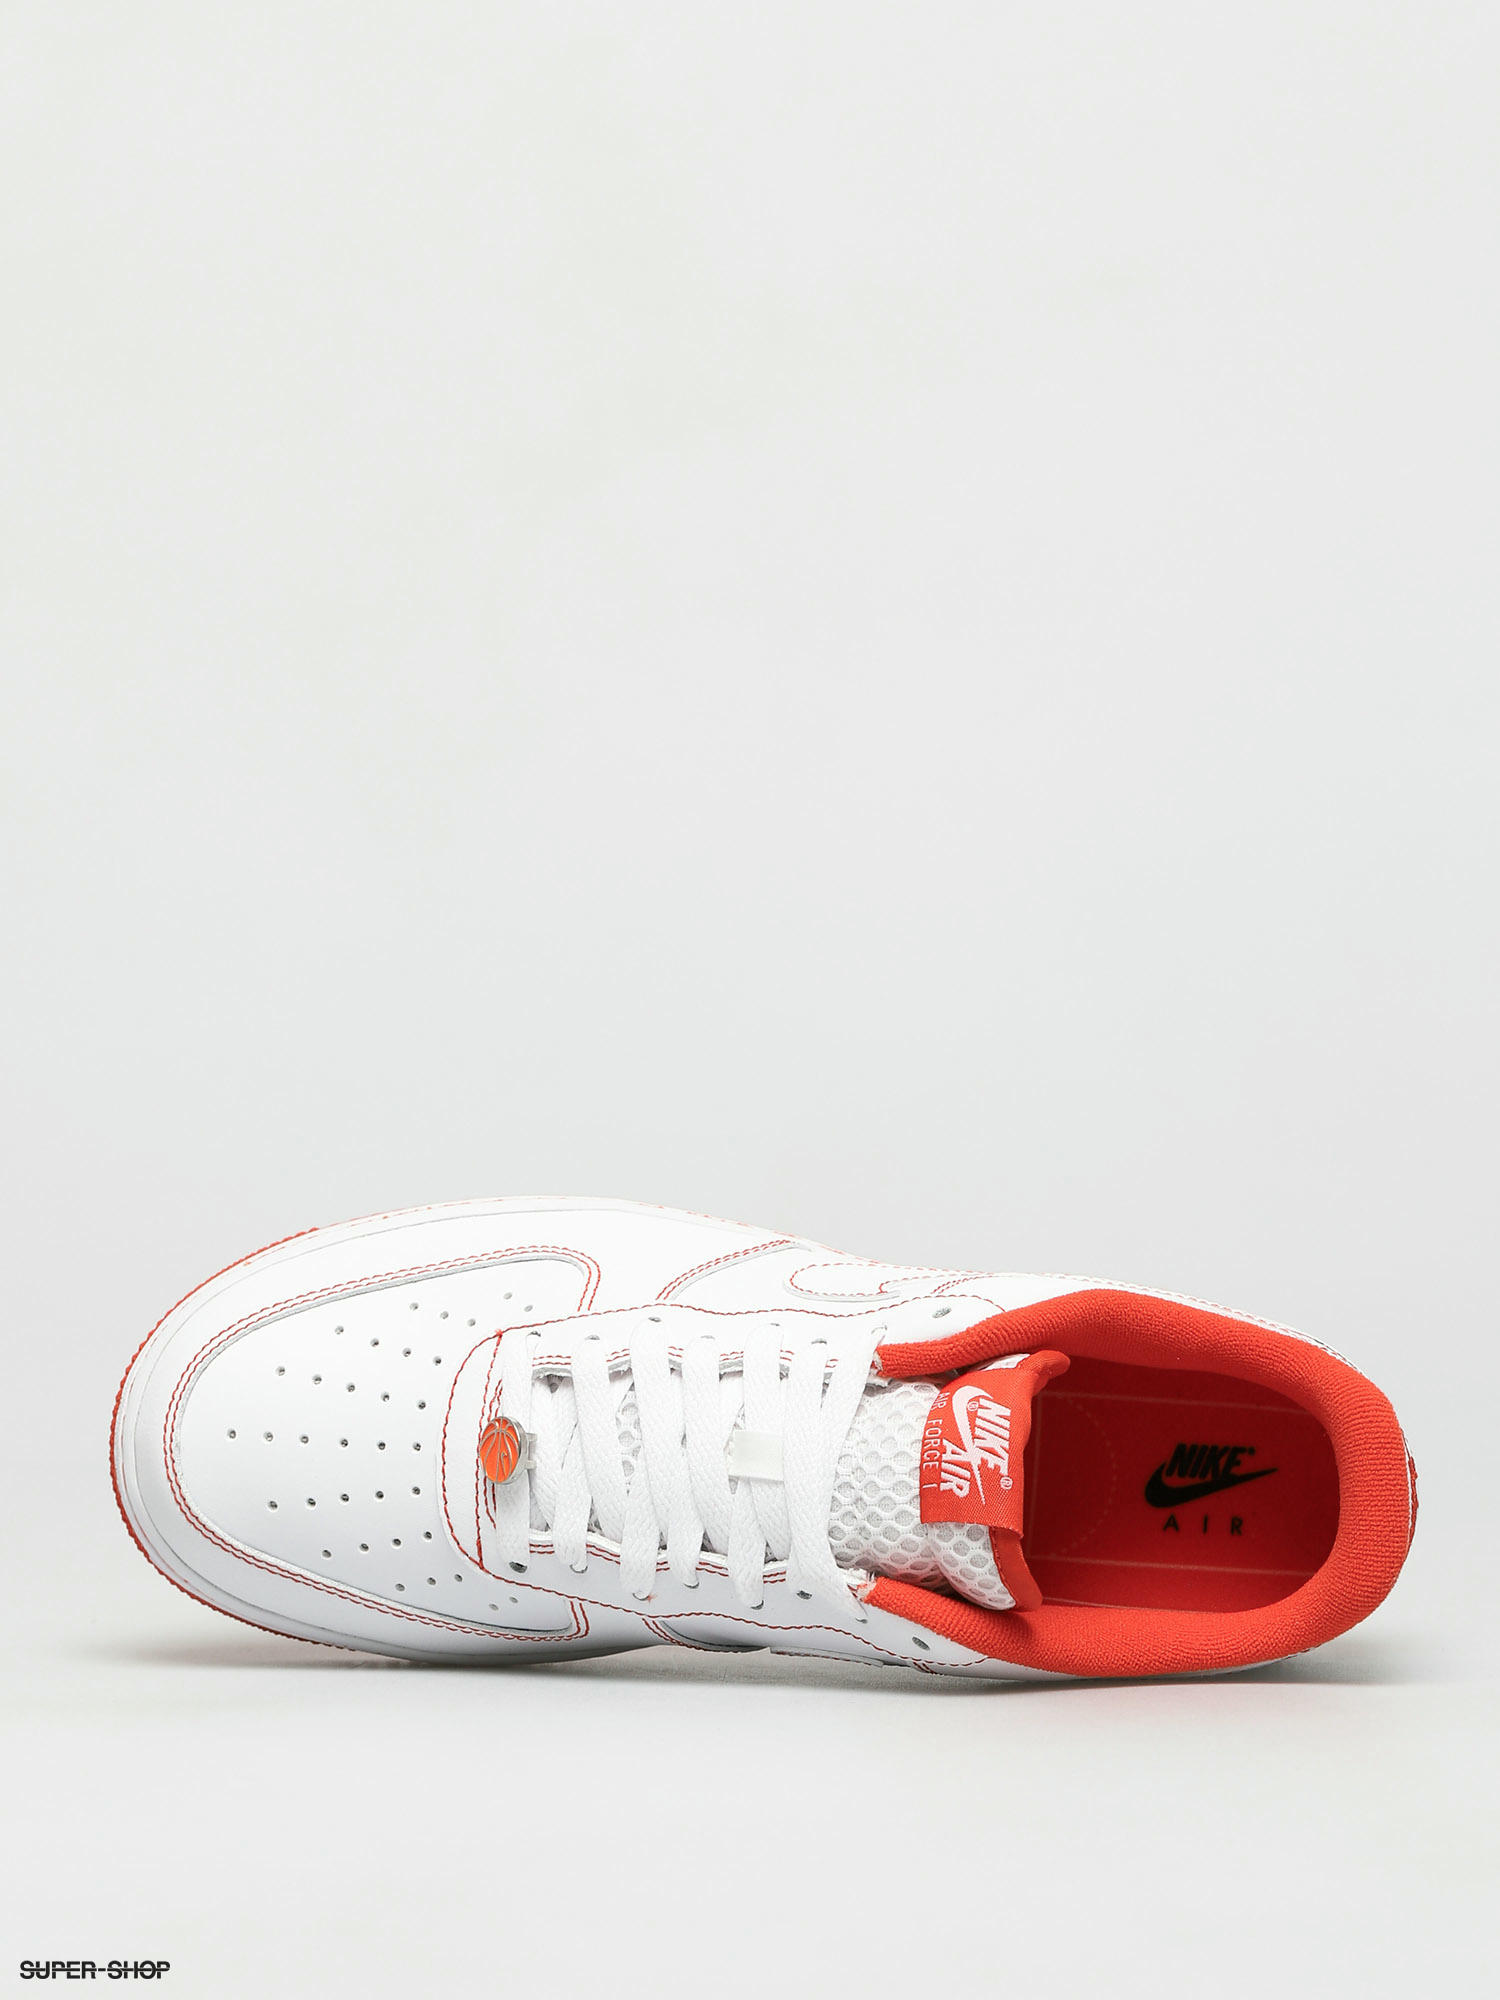 Nike Air Force 1 07 LV8 White/Team Orange Men's Shoes - Hibbett